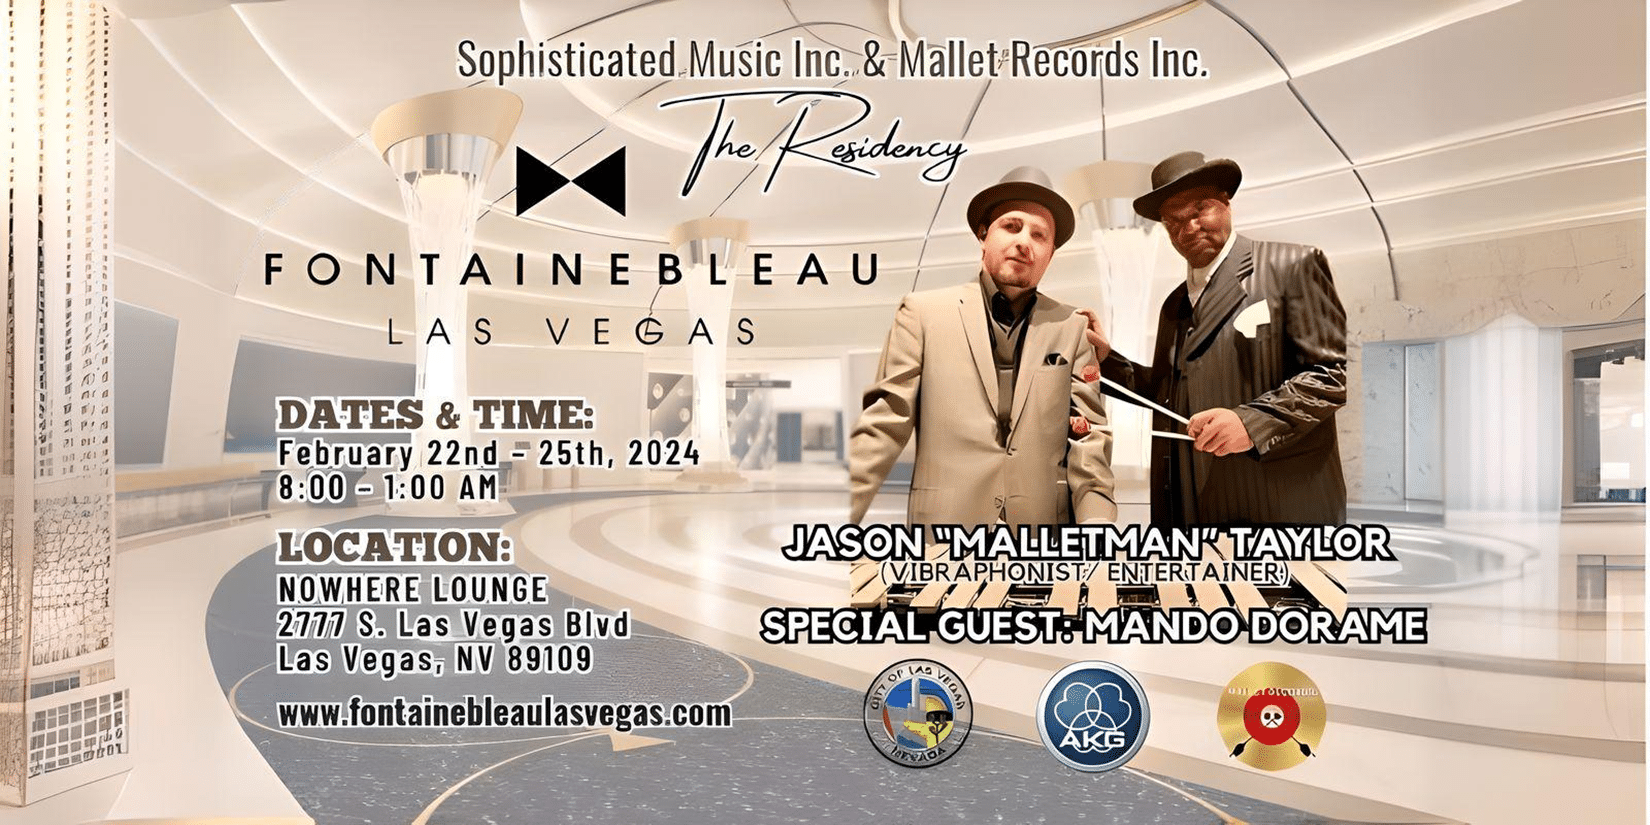 Lionel Hampton's Protégé, Jason Malletman Taylor, Returns to the Fontainebleau Las Vegas February 22nd to the 25th